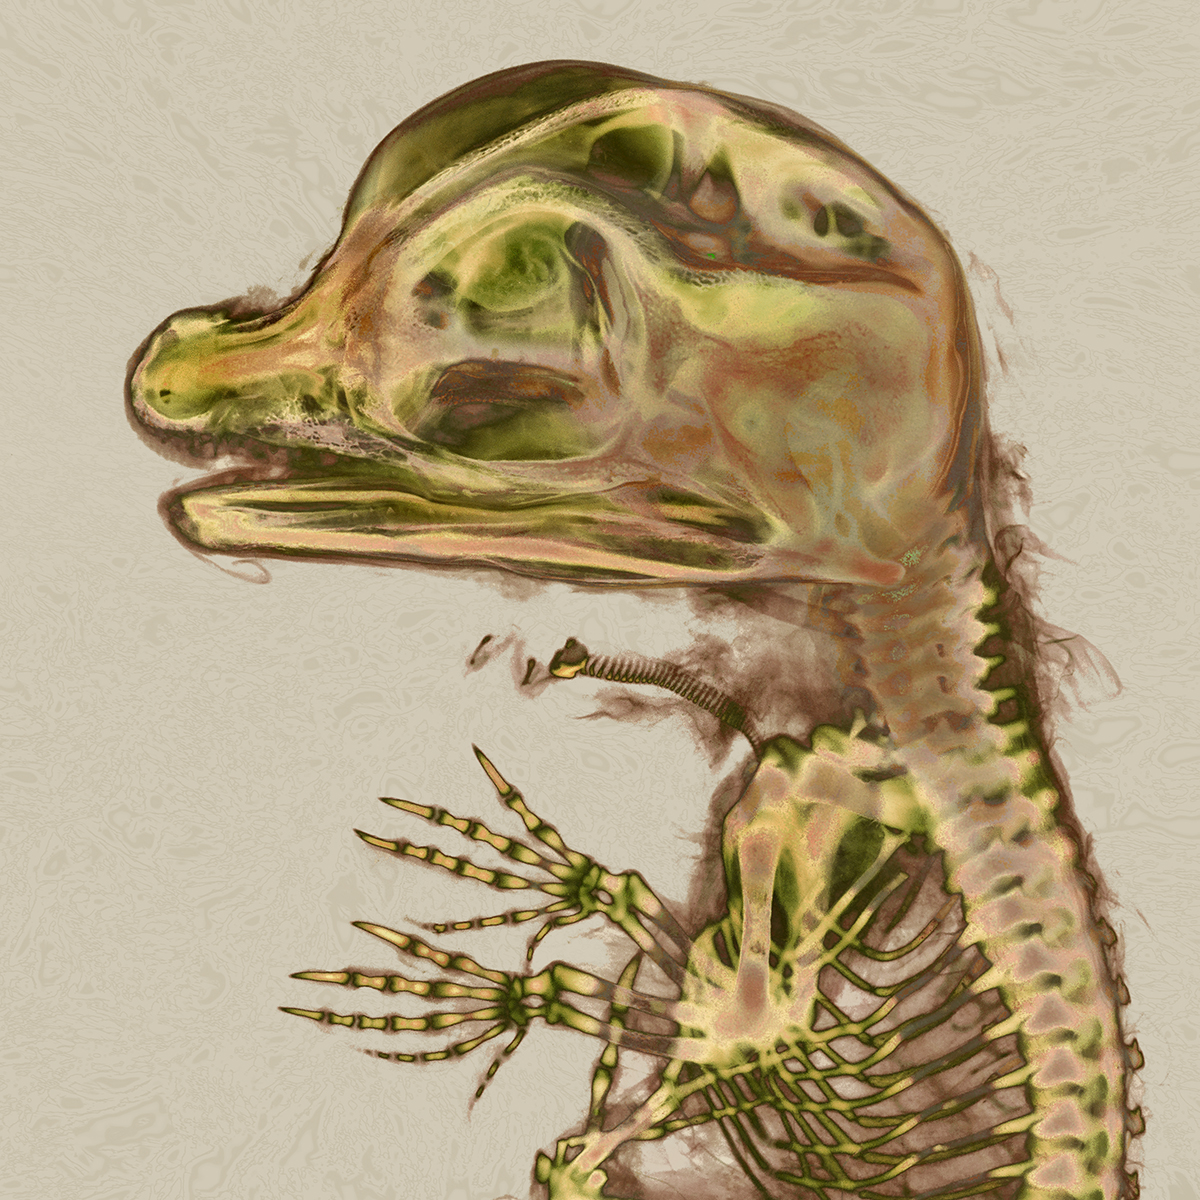 Alligator (archival inkjet print) by Stephen Petegorsky